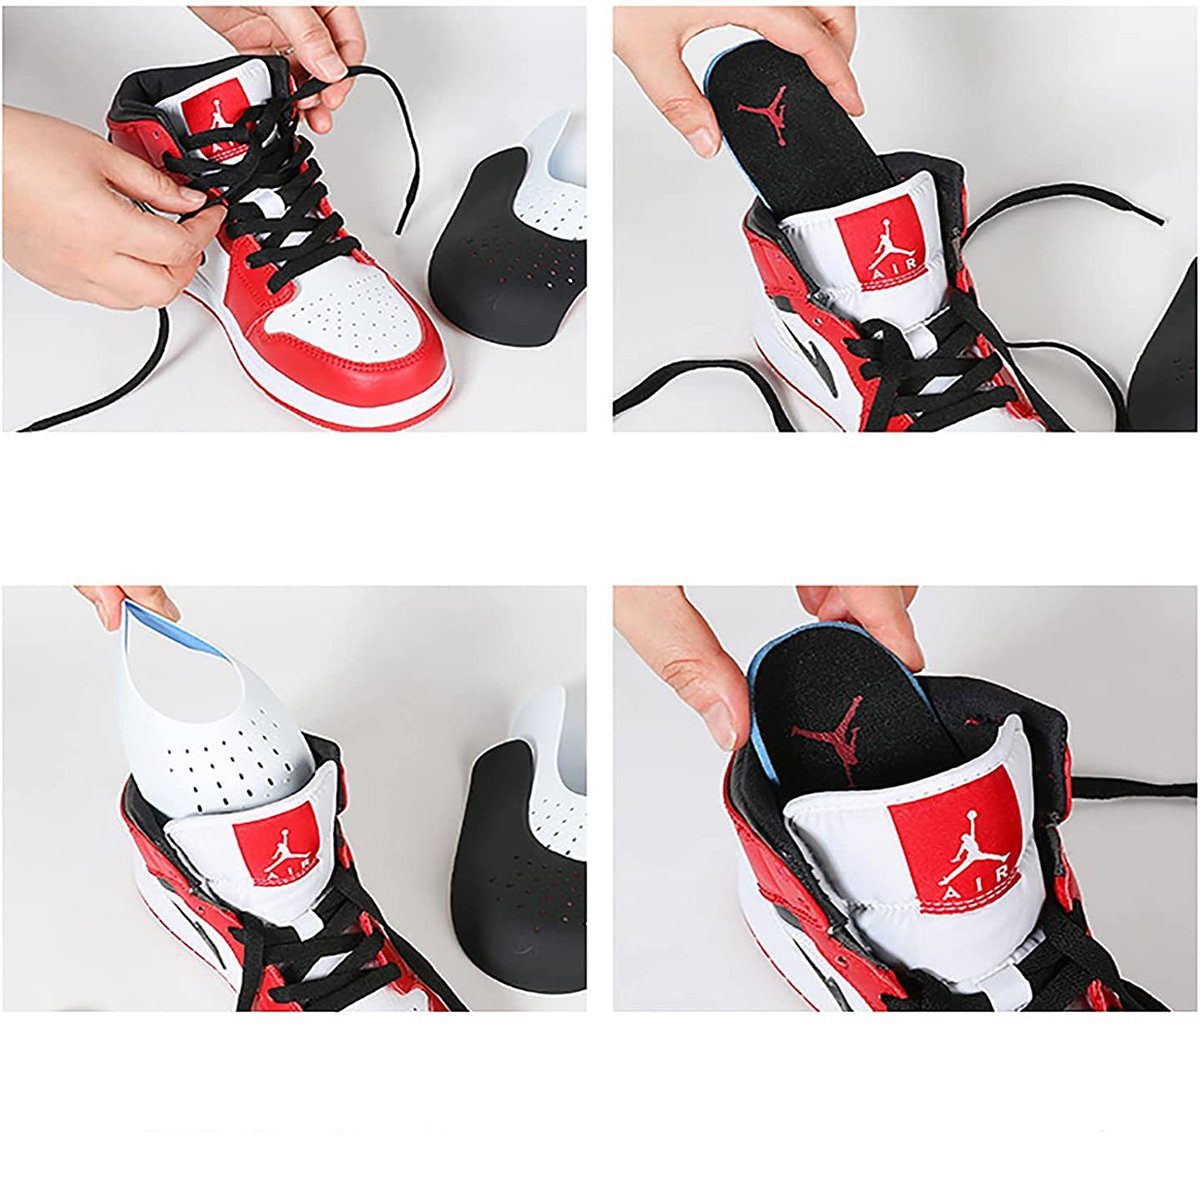 Jormftte Schuhdehner Knitterschutz Zehenbox,Verhindern Sie Sneaker Schuhe Weiß Knitterschutz